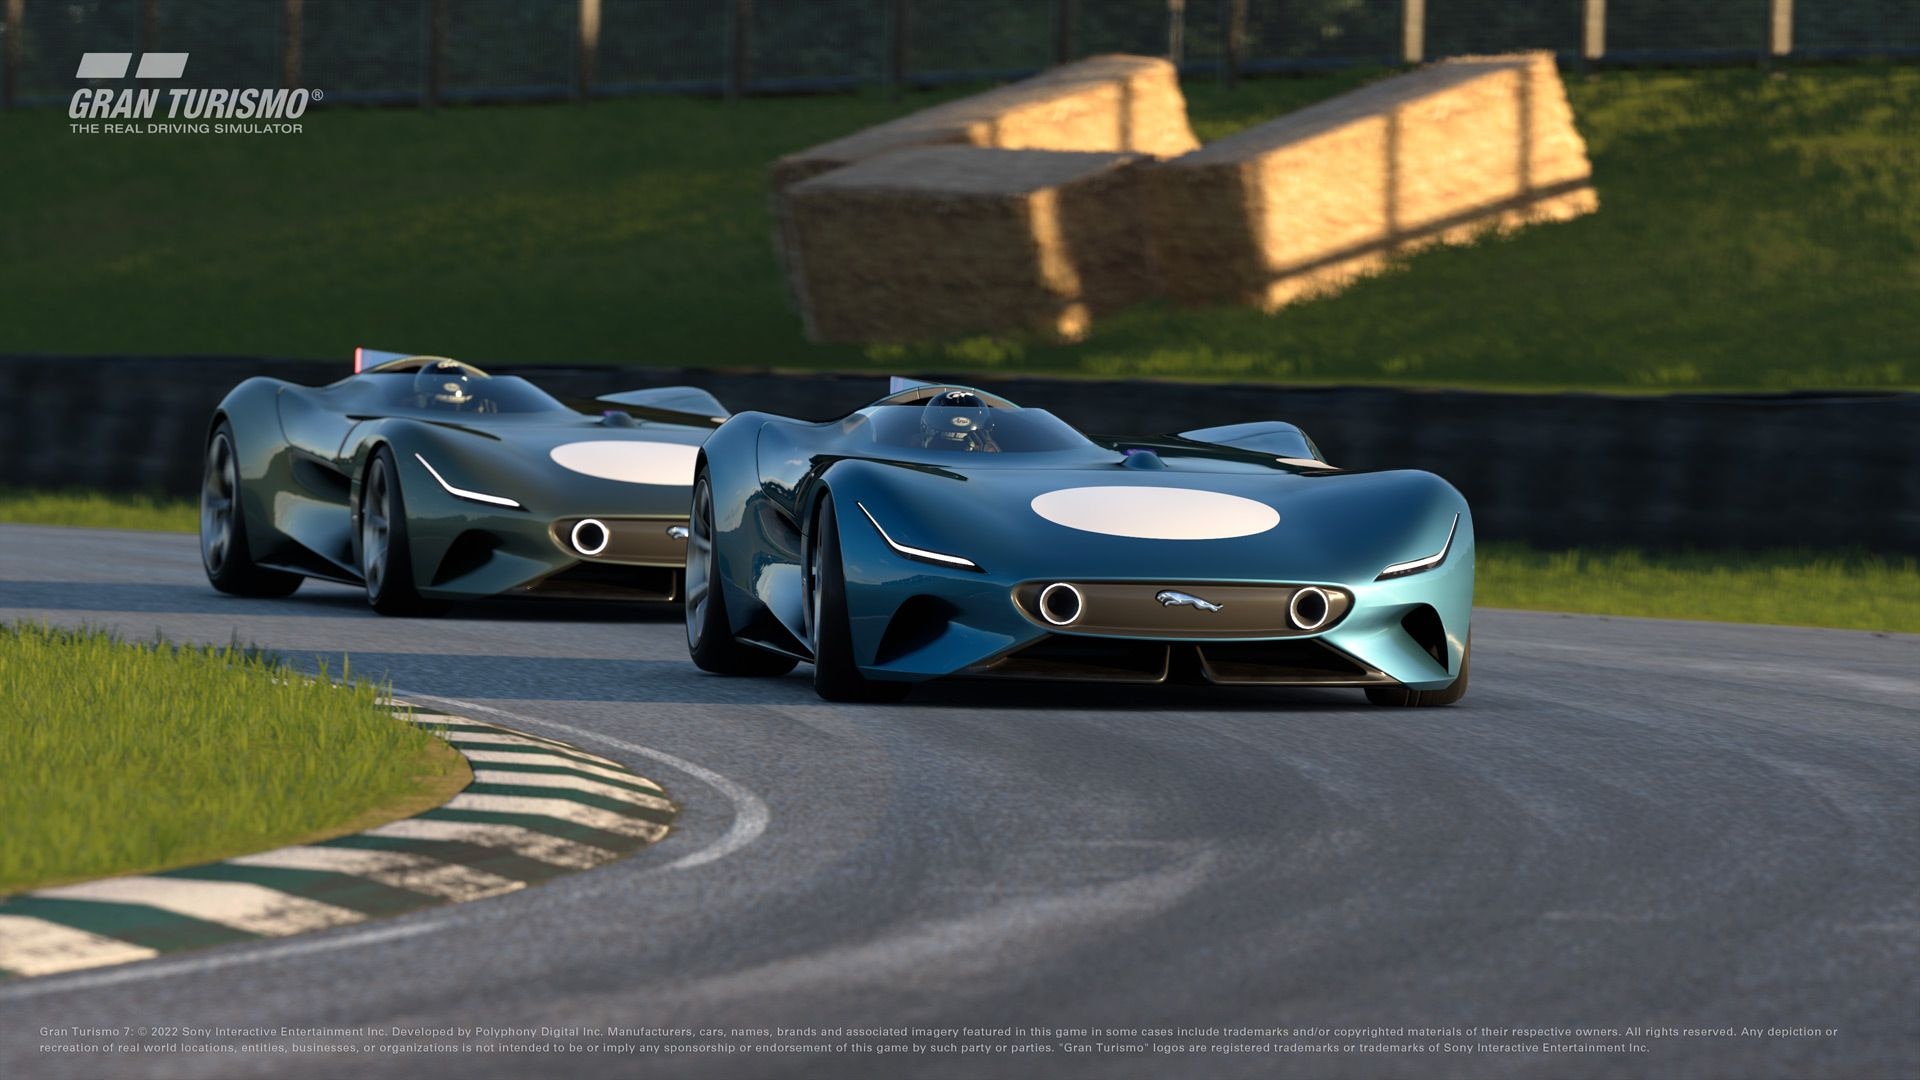 Jaguar Vision Gran Turismo Roadster concept